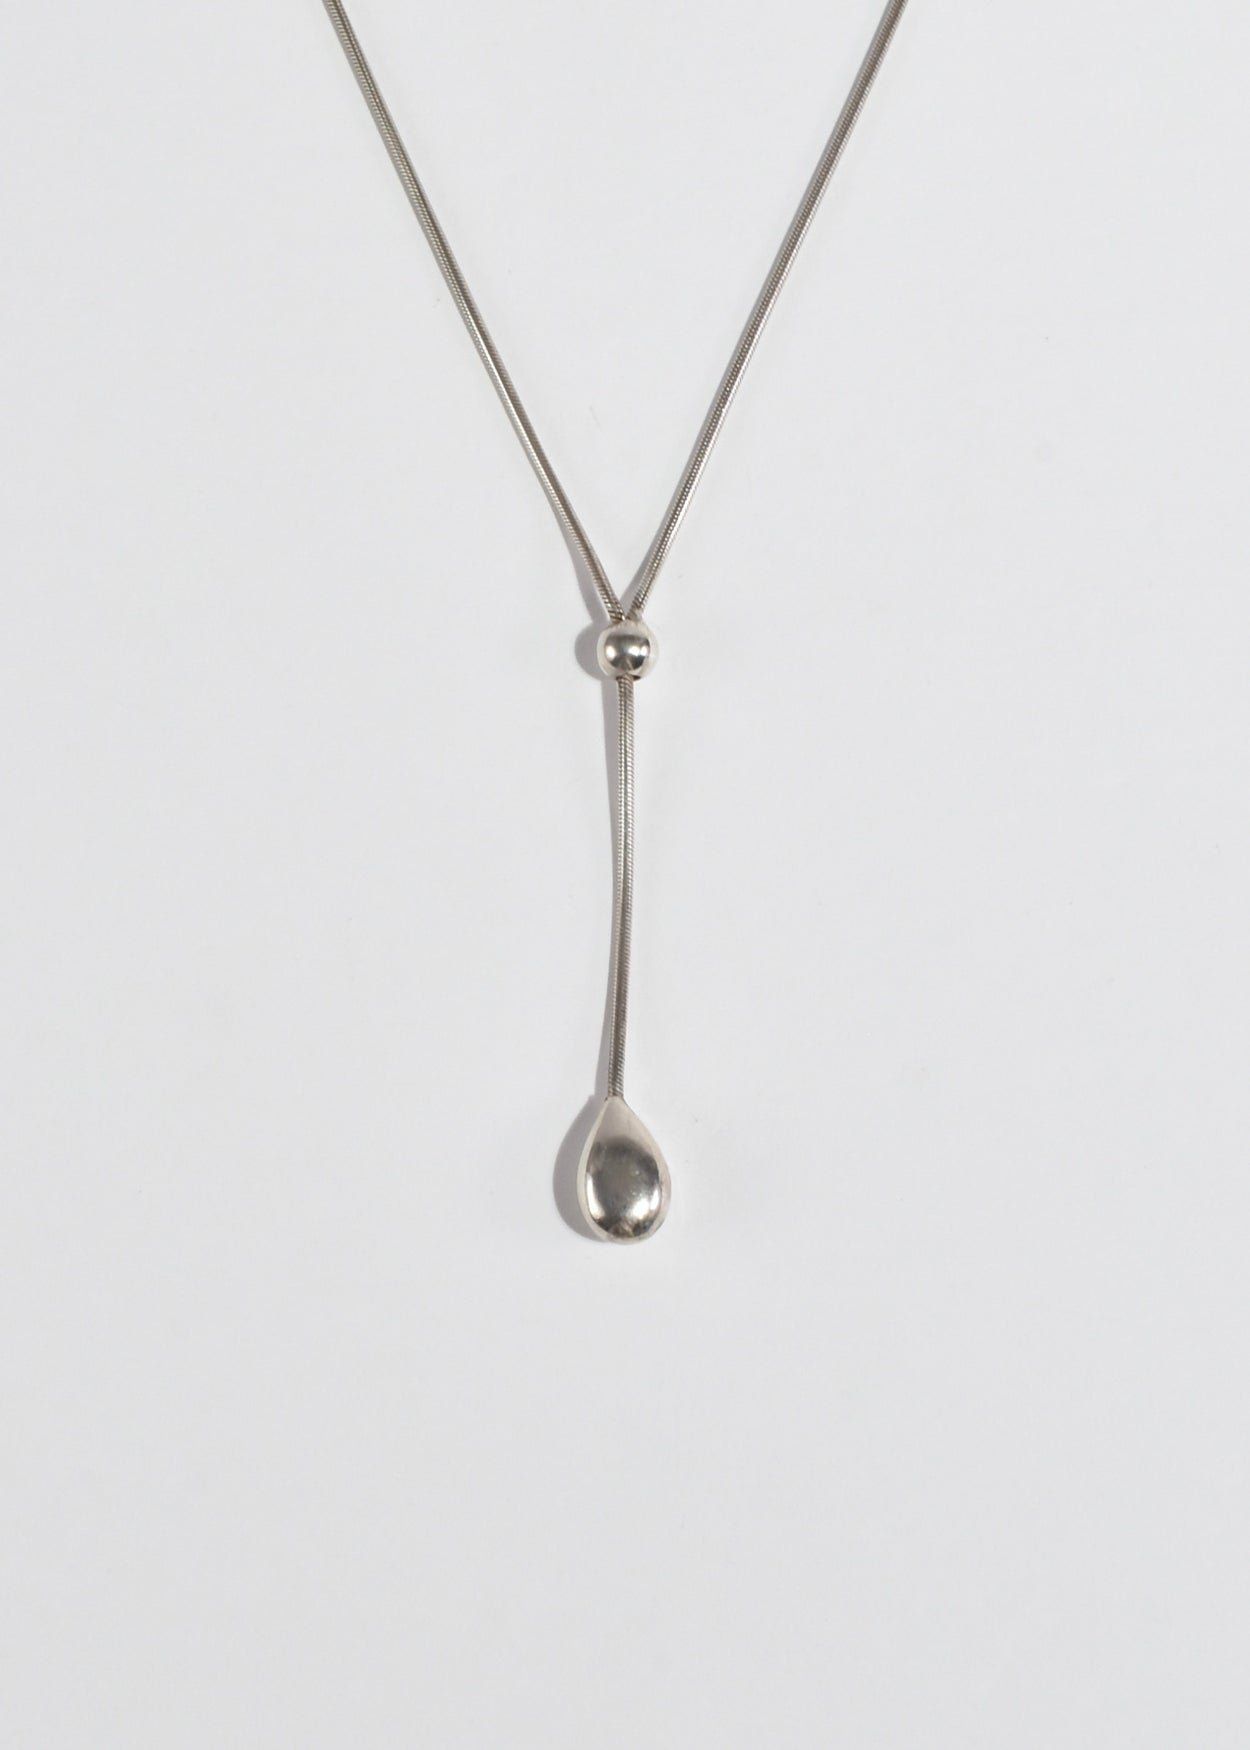 Modernist Silver Necklace